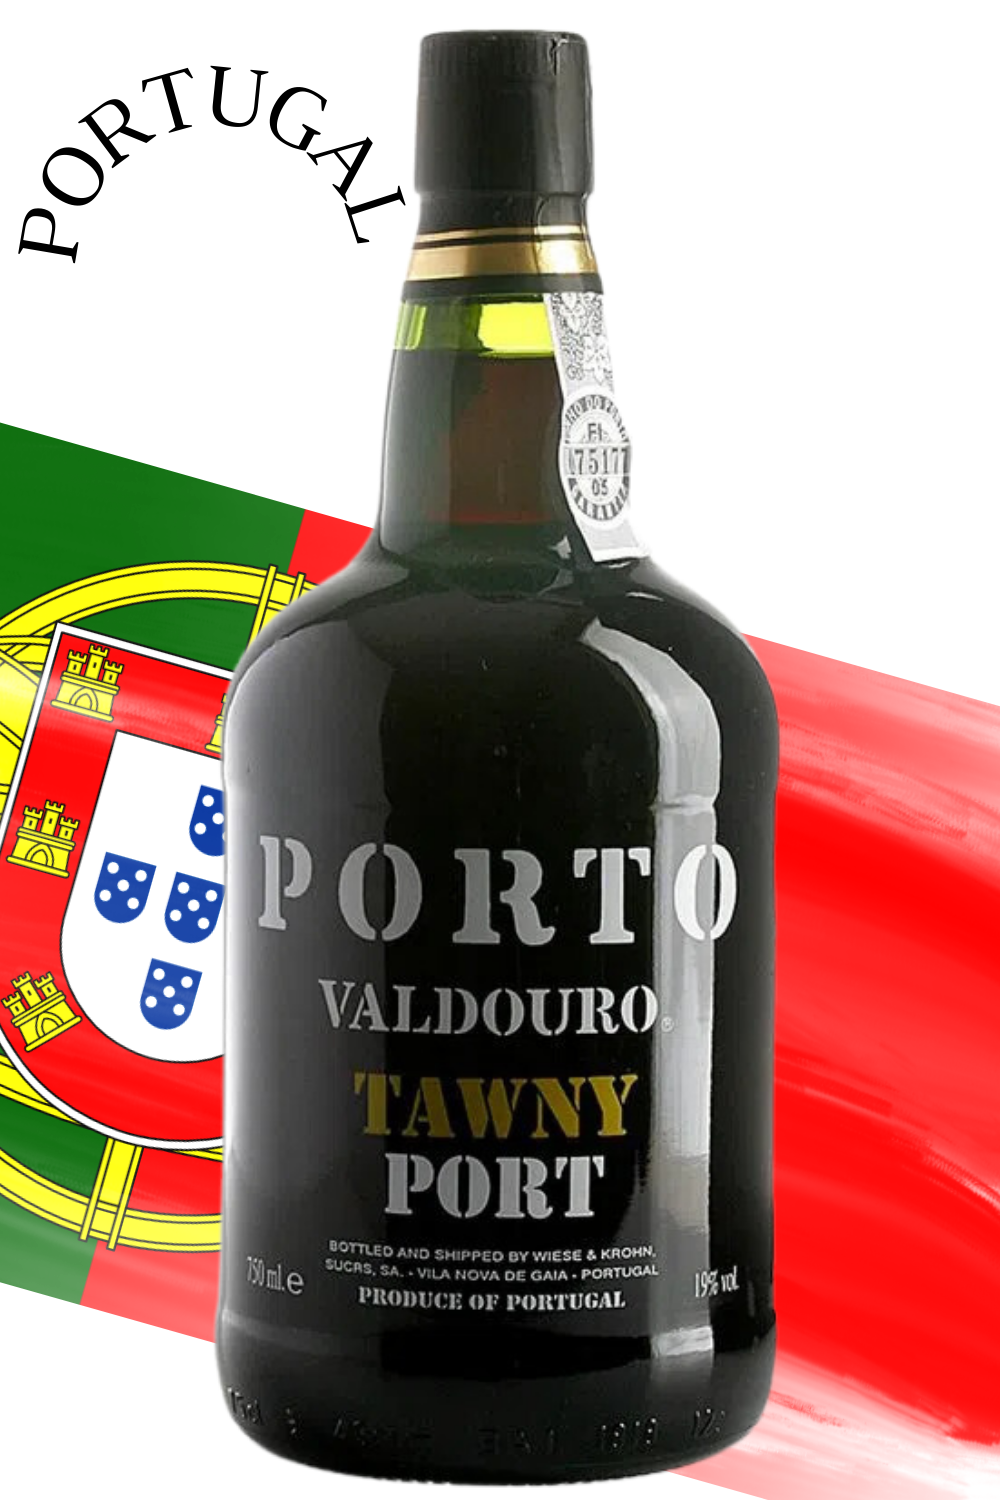 Vinho Do Porto Valdouro Tawny | Vinhos do porto - Adega Almeida - Adega  Almeida